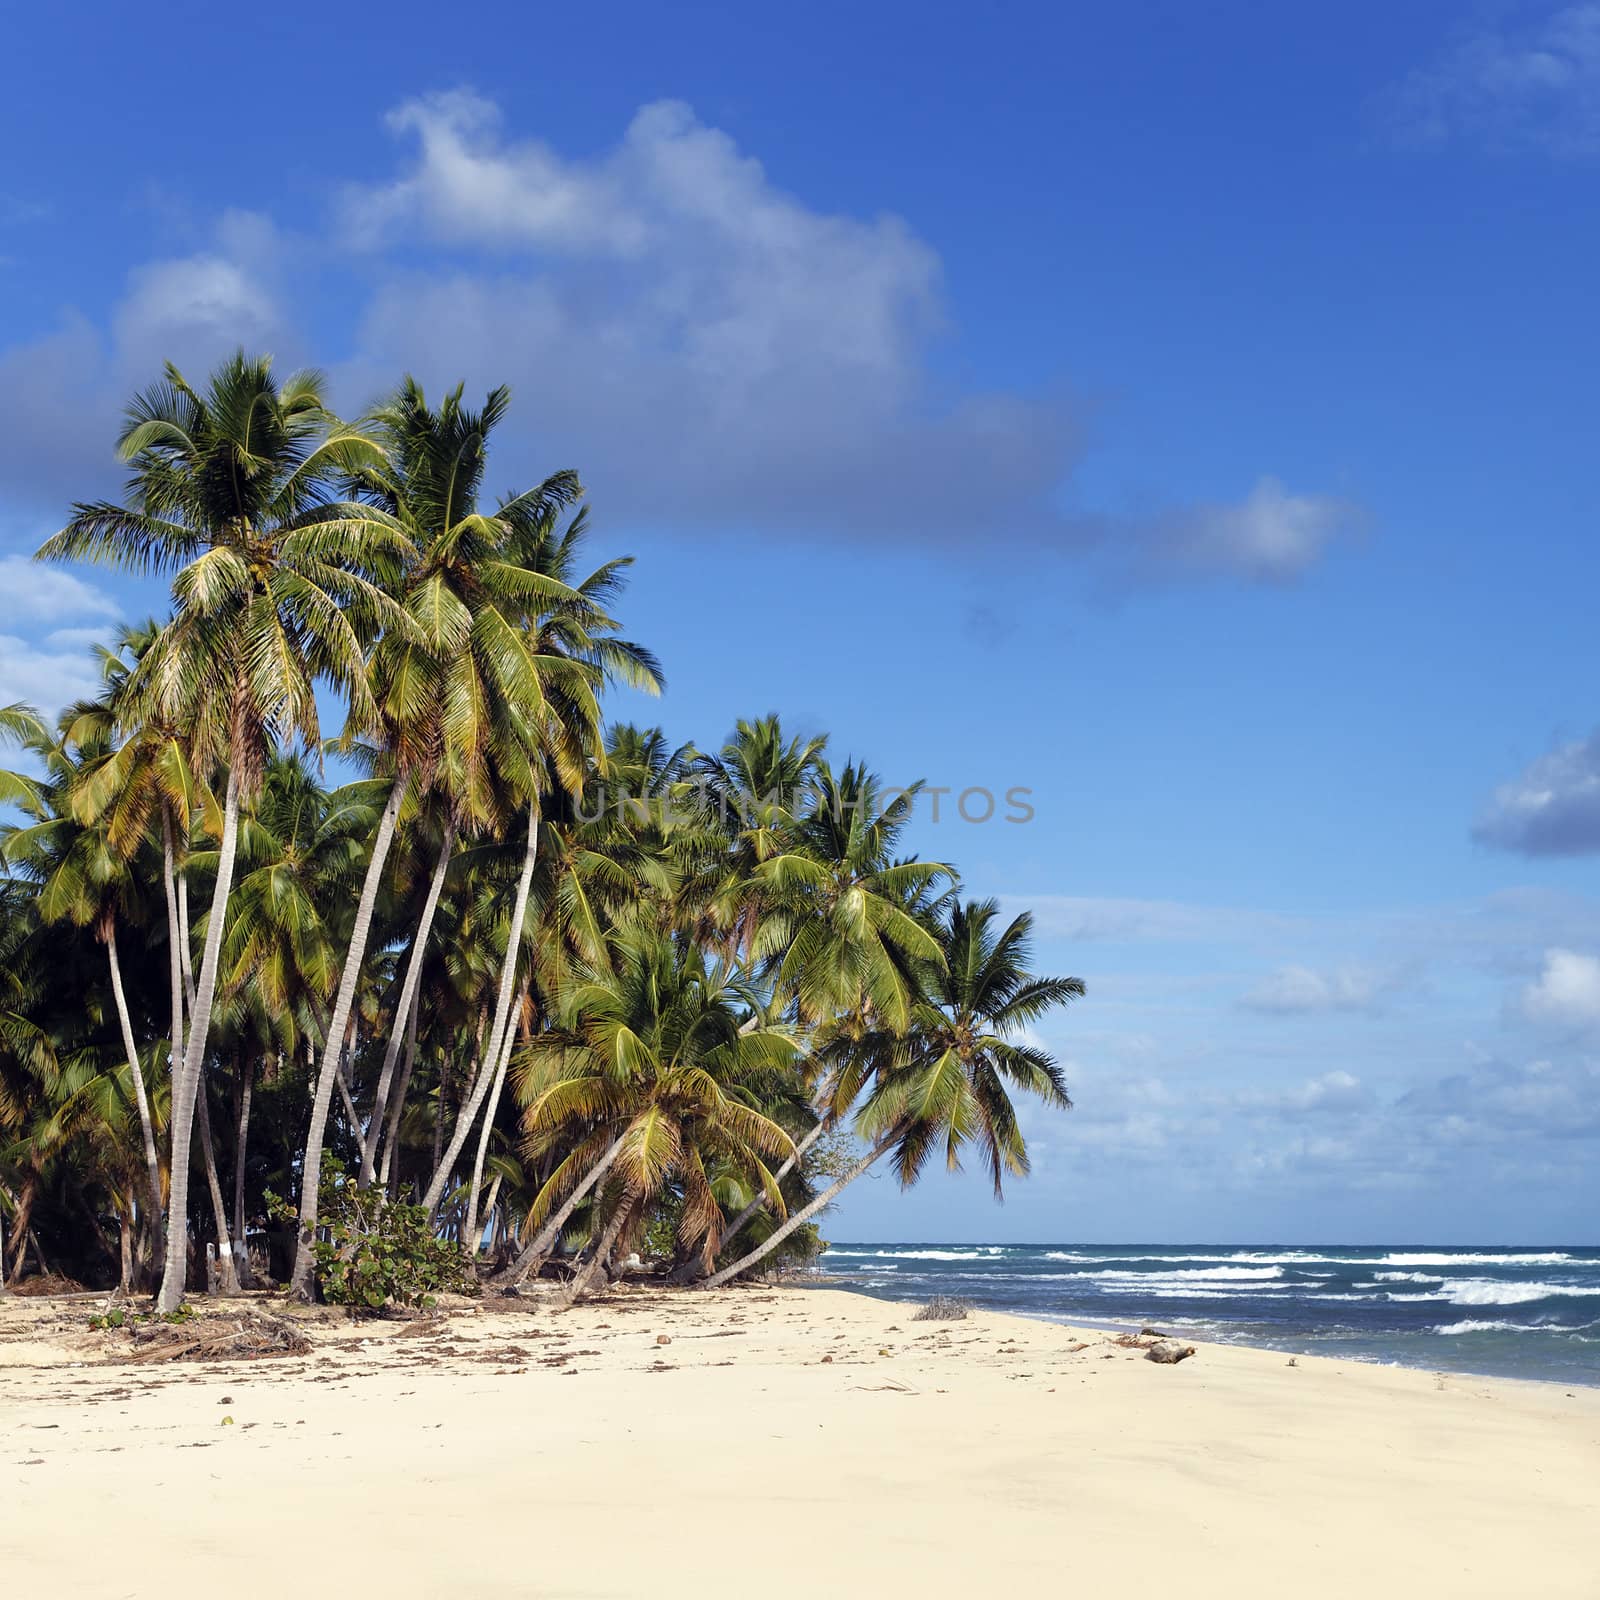 caribbean beach square by vwalakte